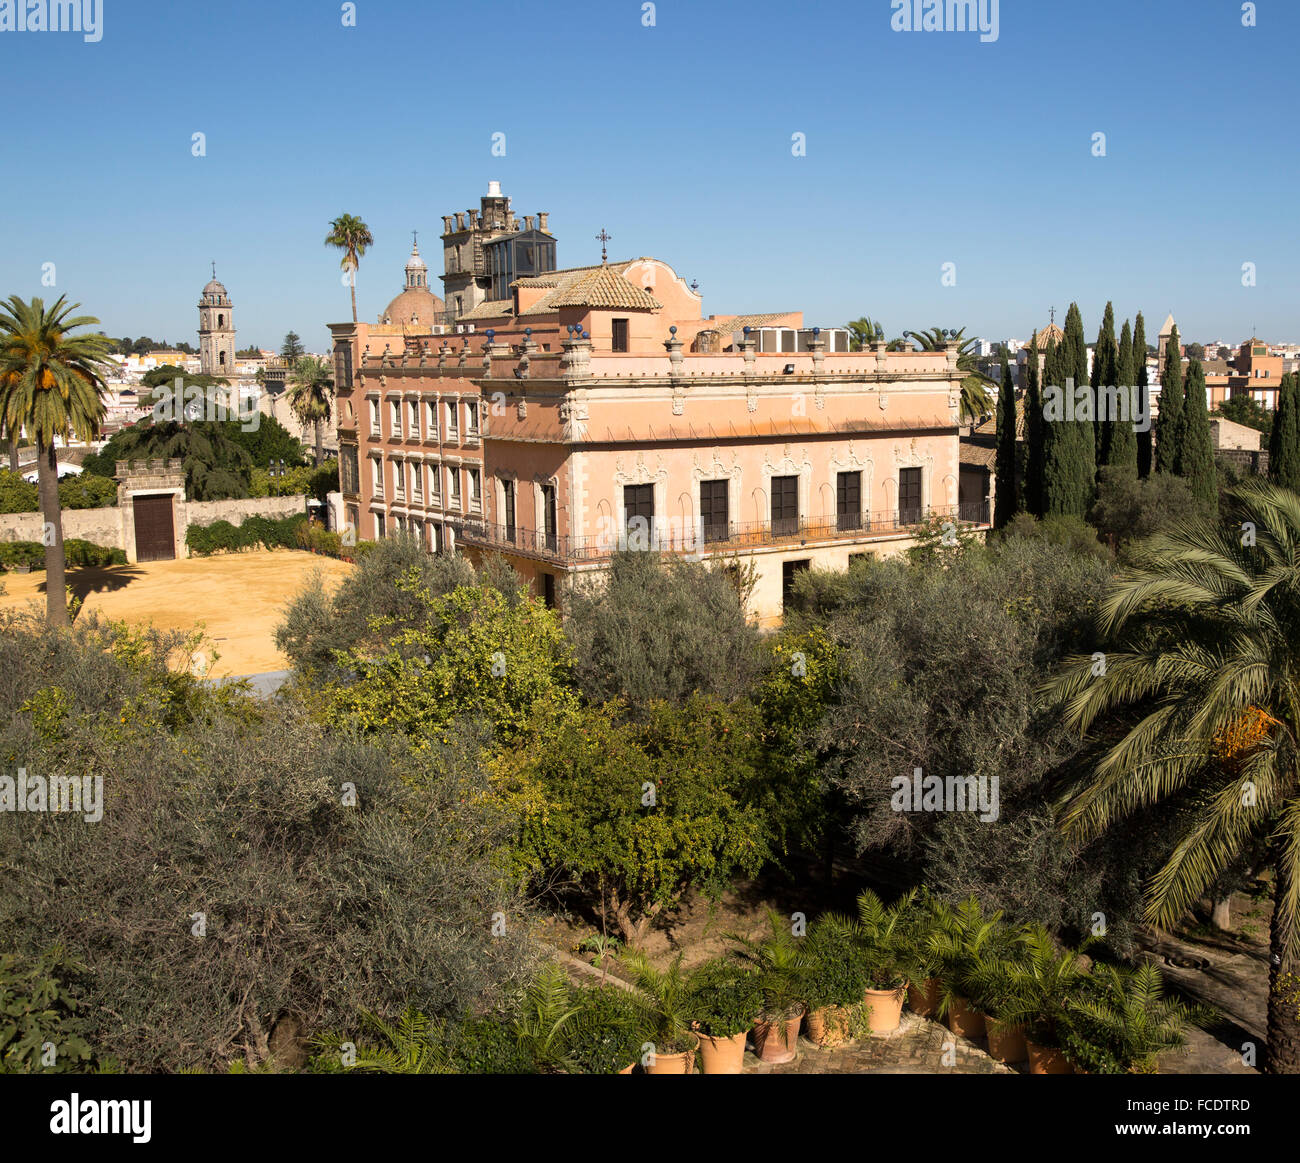 Edificio storico, Palacio de Villavicencio e giardini all'Alcazar, Jerez de la Frontera, Spagna Foto Stock